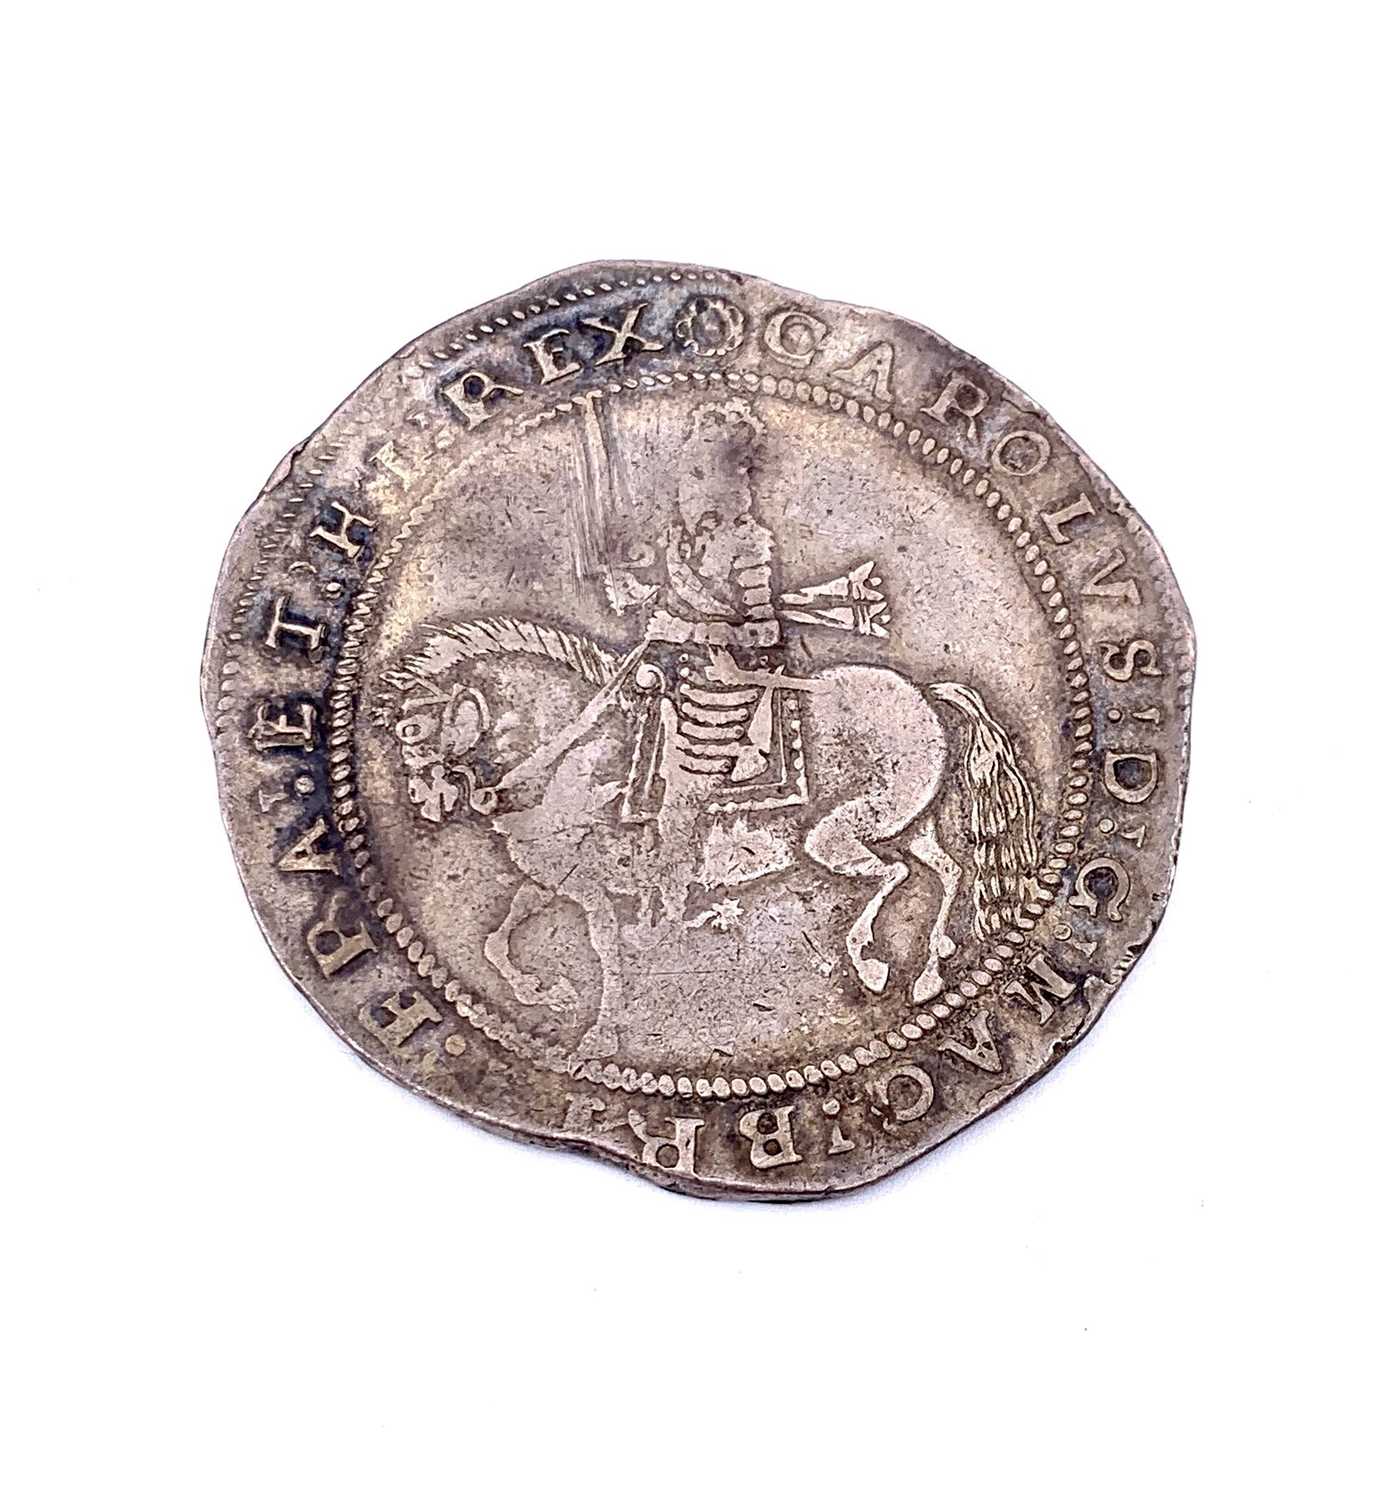 Charles I Crown, Truro Mint (Cornish interest). 1642-33 MM Rose, nice grade - good detail. - Image 3 of 3